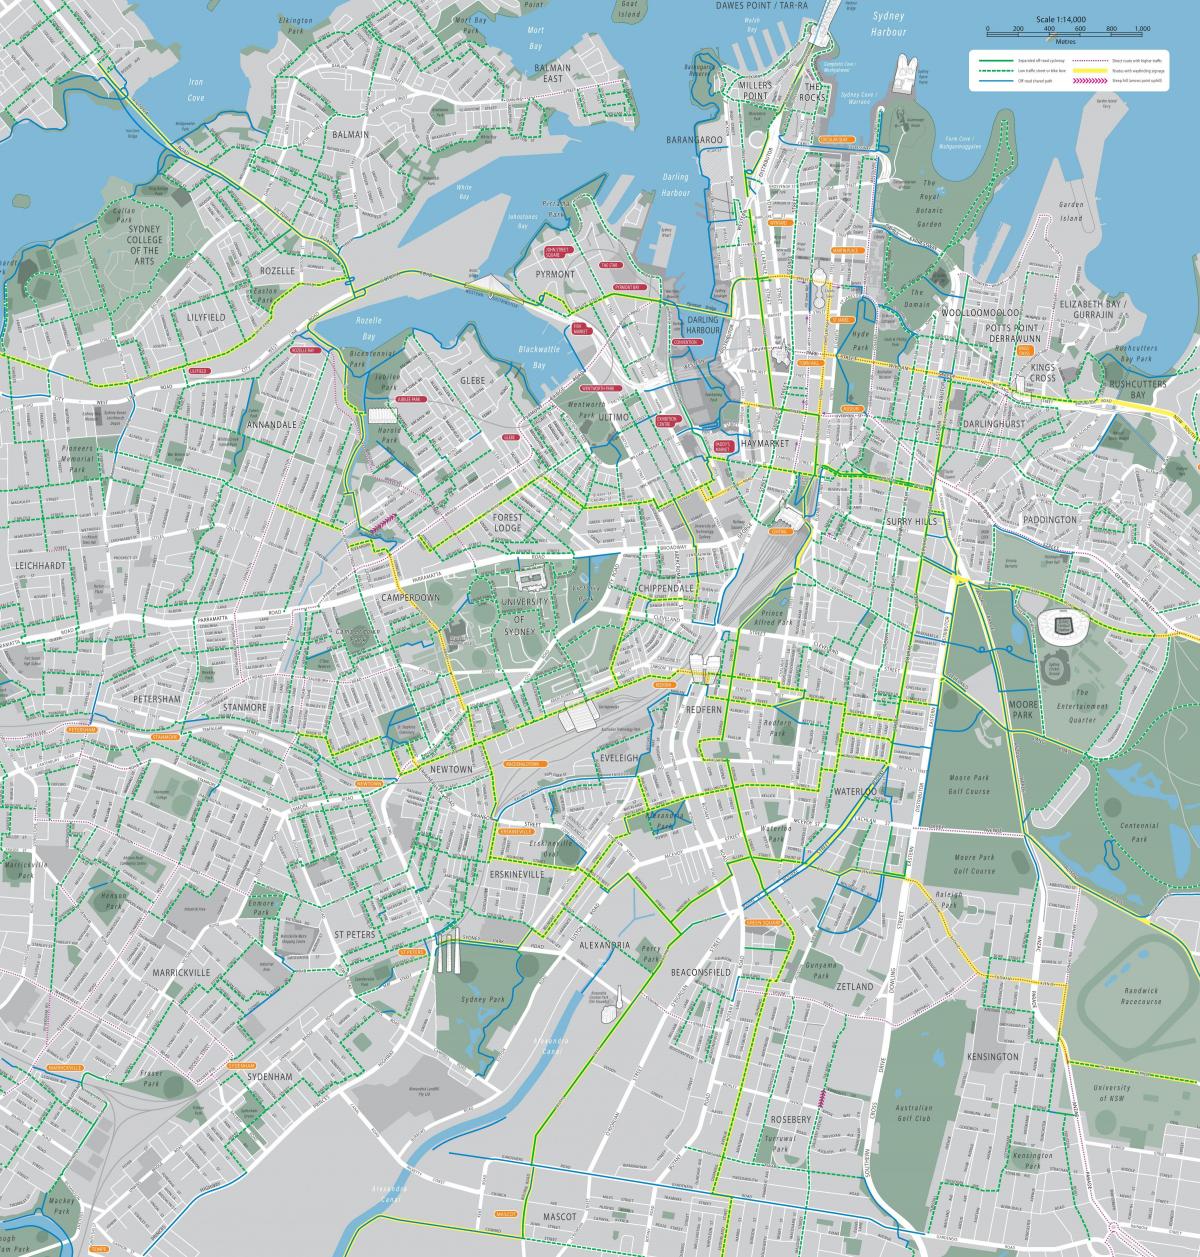 Sydney bike lane map